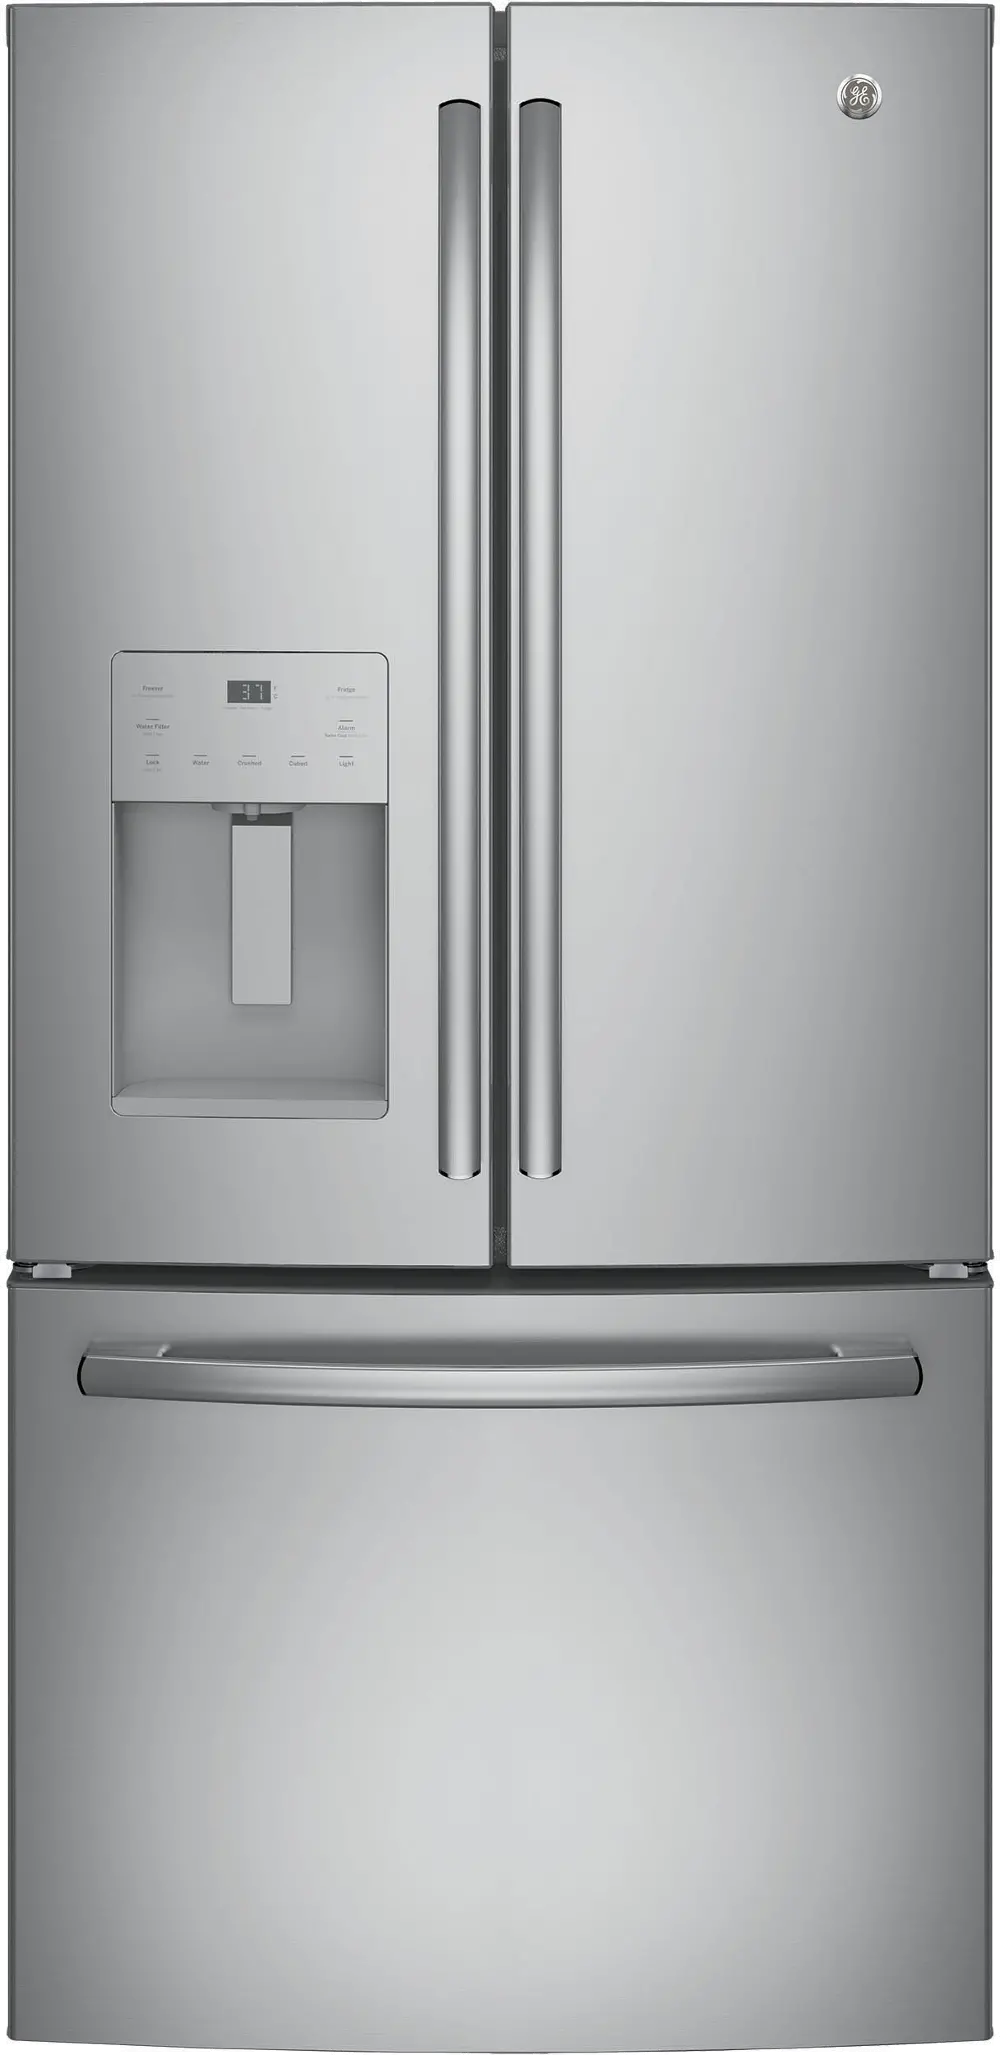 GYE18JSLSS GE French Door Refrigerator - 33 Inch Stainless Steel Counter-Depth-1